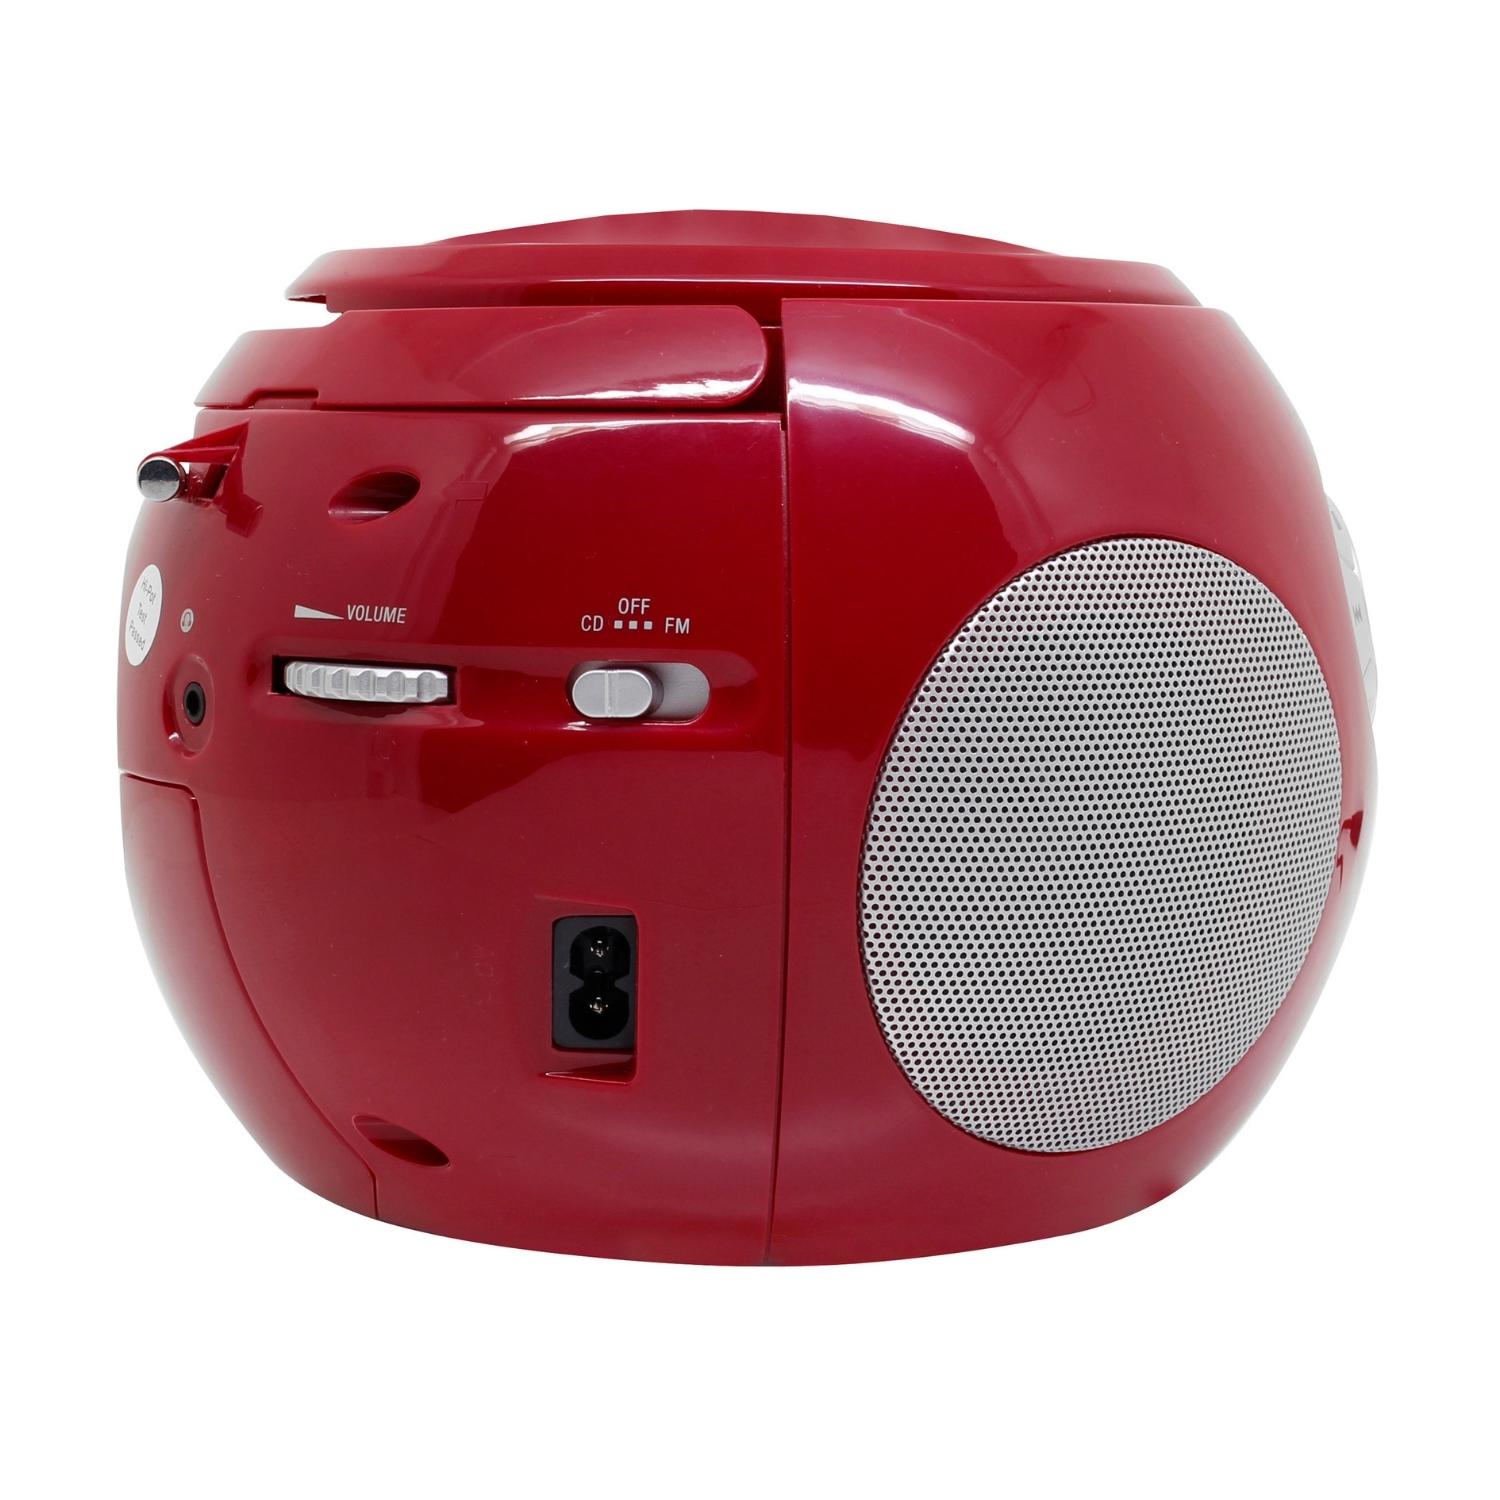 soundmaster Lecteur radio/CD SCD5100RO, rouge 